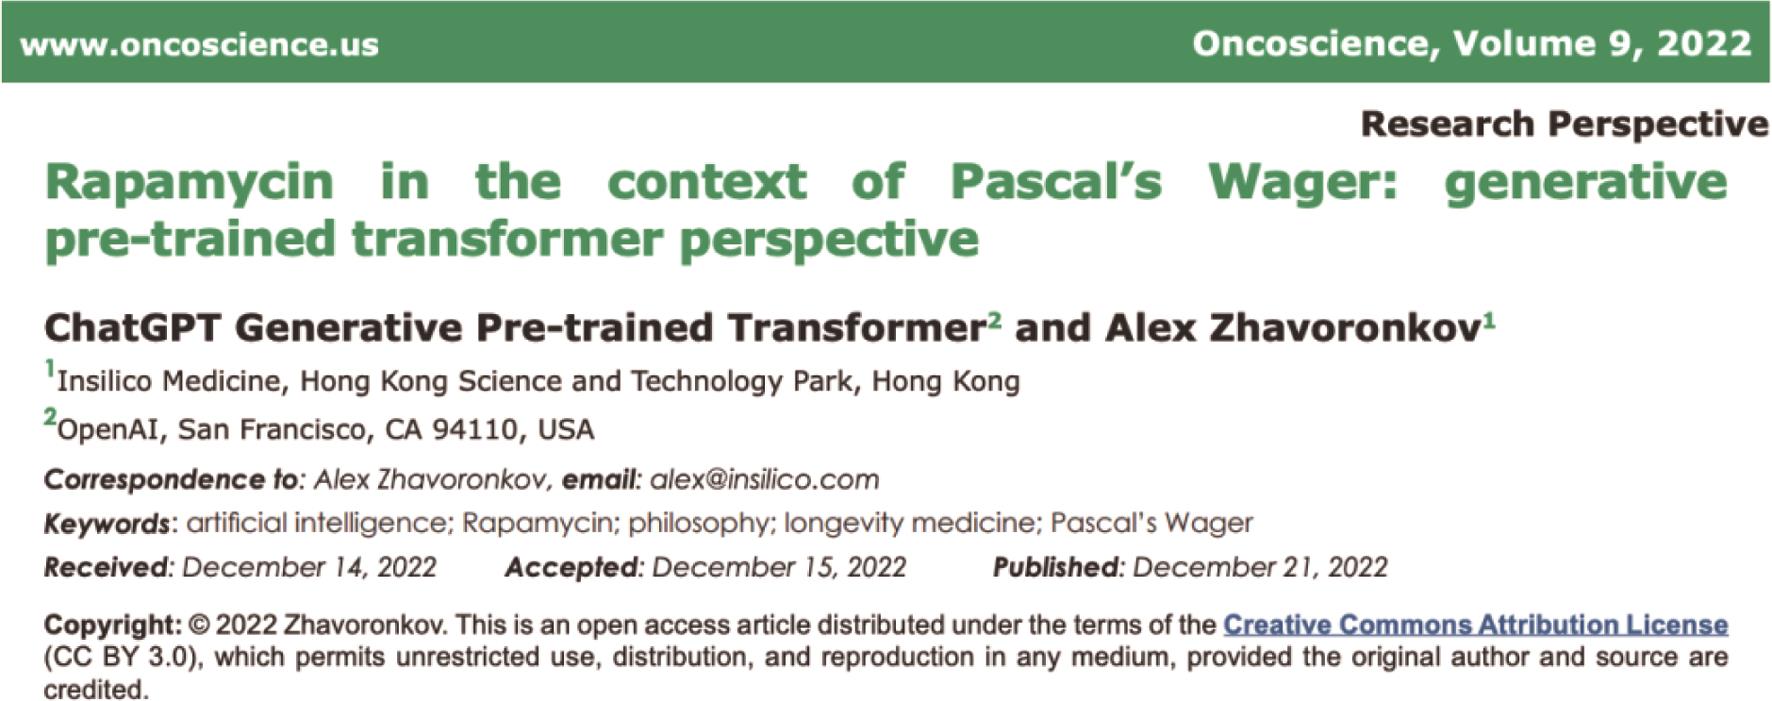 ChatGPT 以共同作者的身份，与英矽智能创始人兼首席执行官 Alex Zhavoronkov 博士在科学期刊 Oncoscience 发表了一篇研究观点文章， 通过帕斯卡赌注（Pascal's Wager）的哲学框架探讨了雷帕霉素（Rapamycin）在抗衰老方面的应用（图片来源ChatGPT首次与人类一起，成为了“共同作者”-36氪 (36kr.com)）。